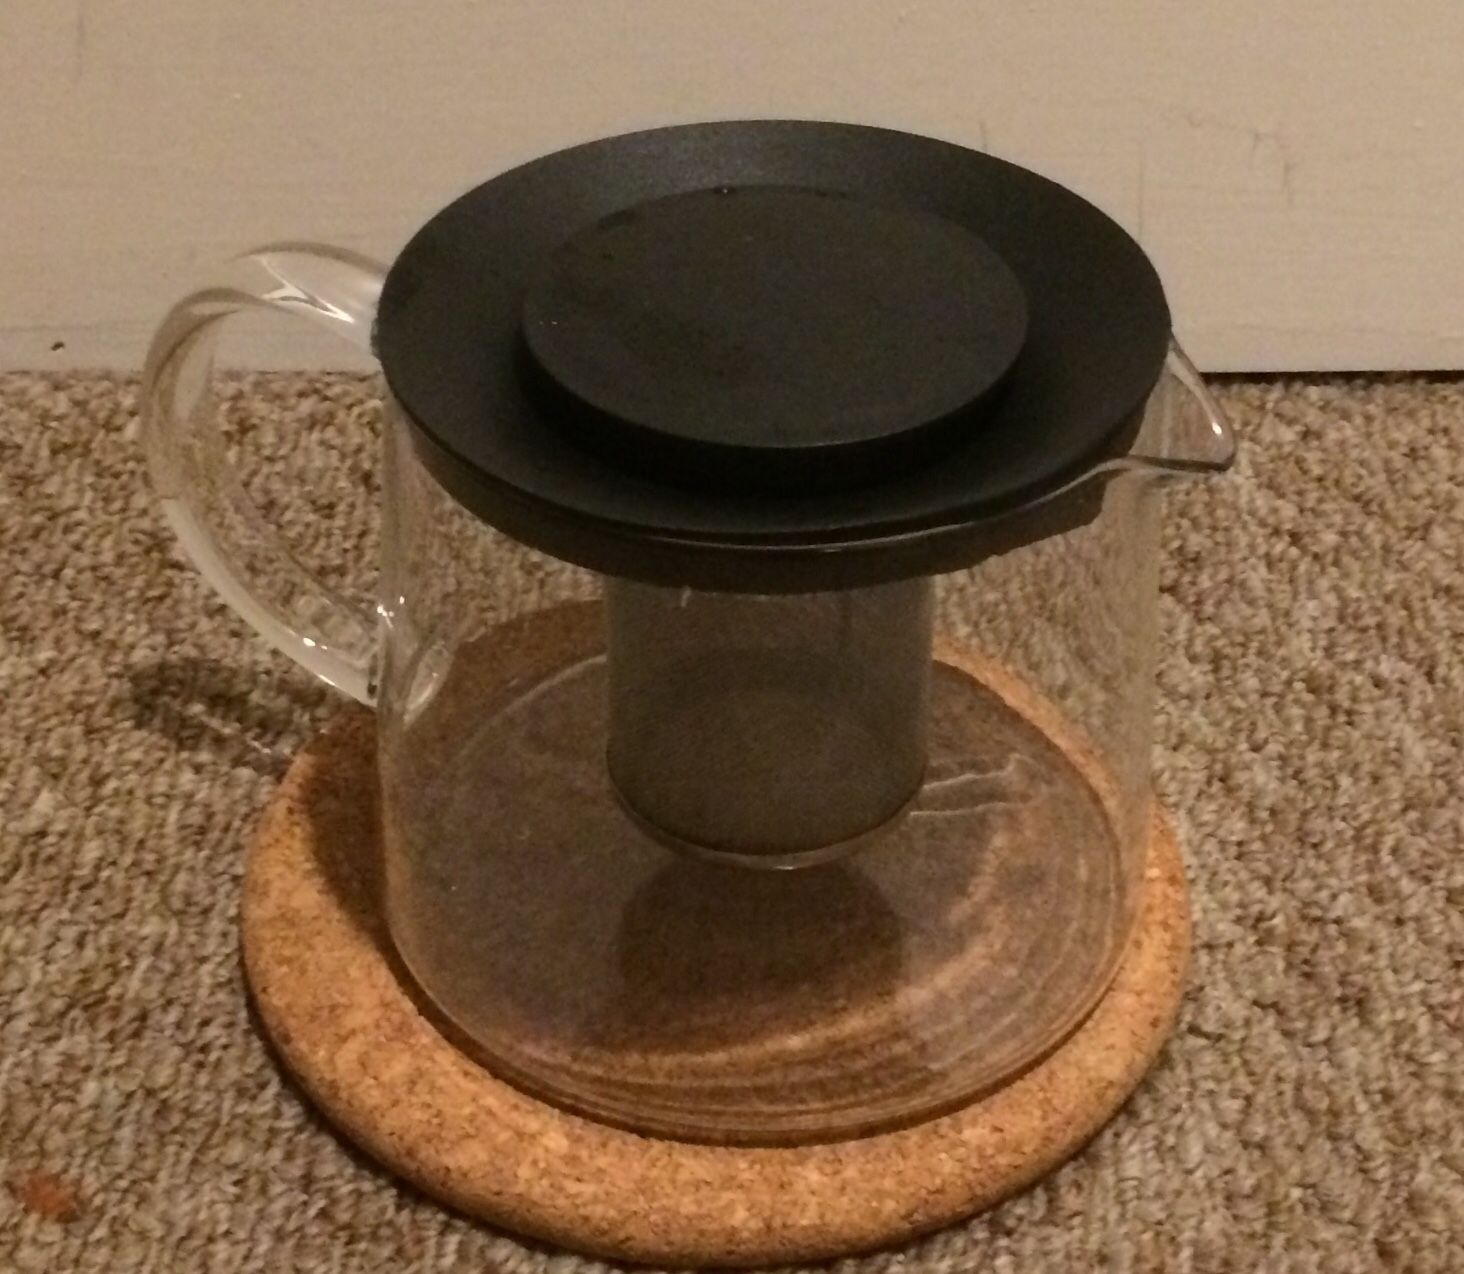 Glassware Tea pot with infuser